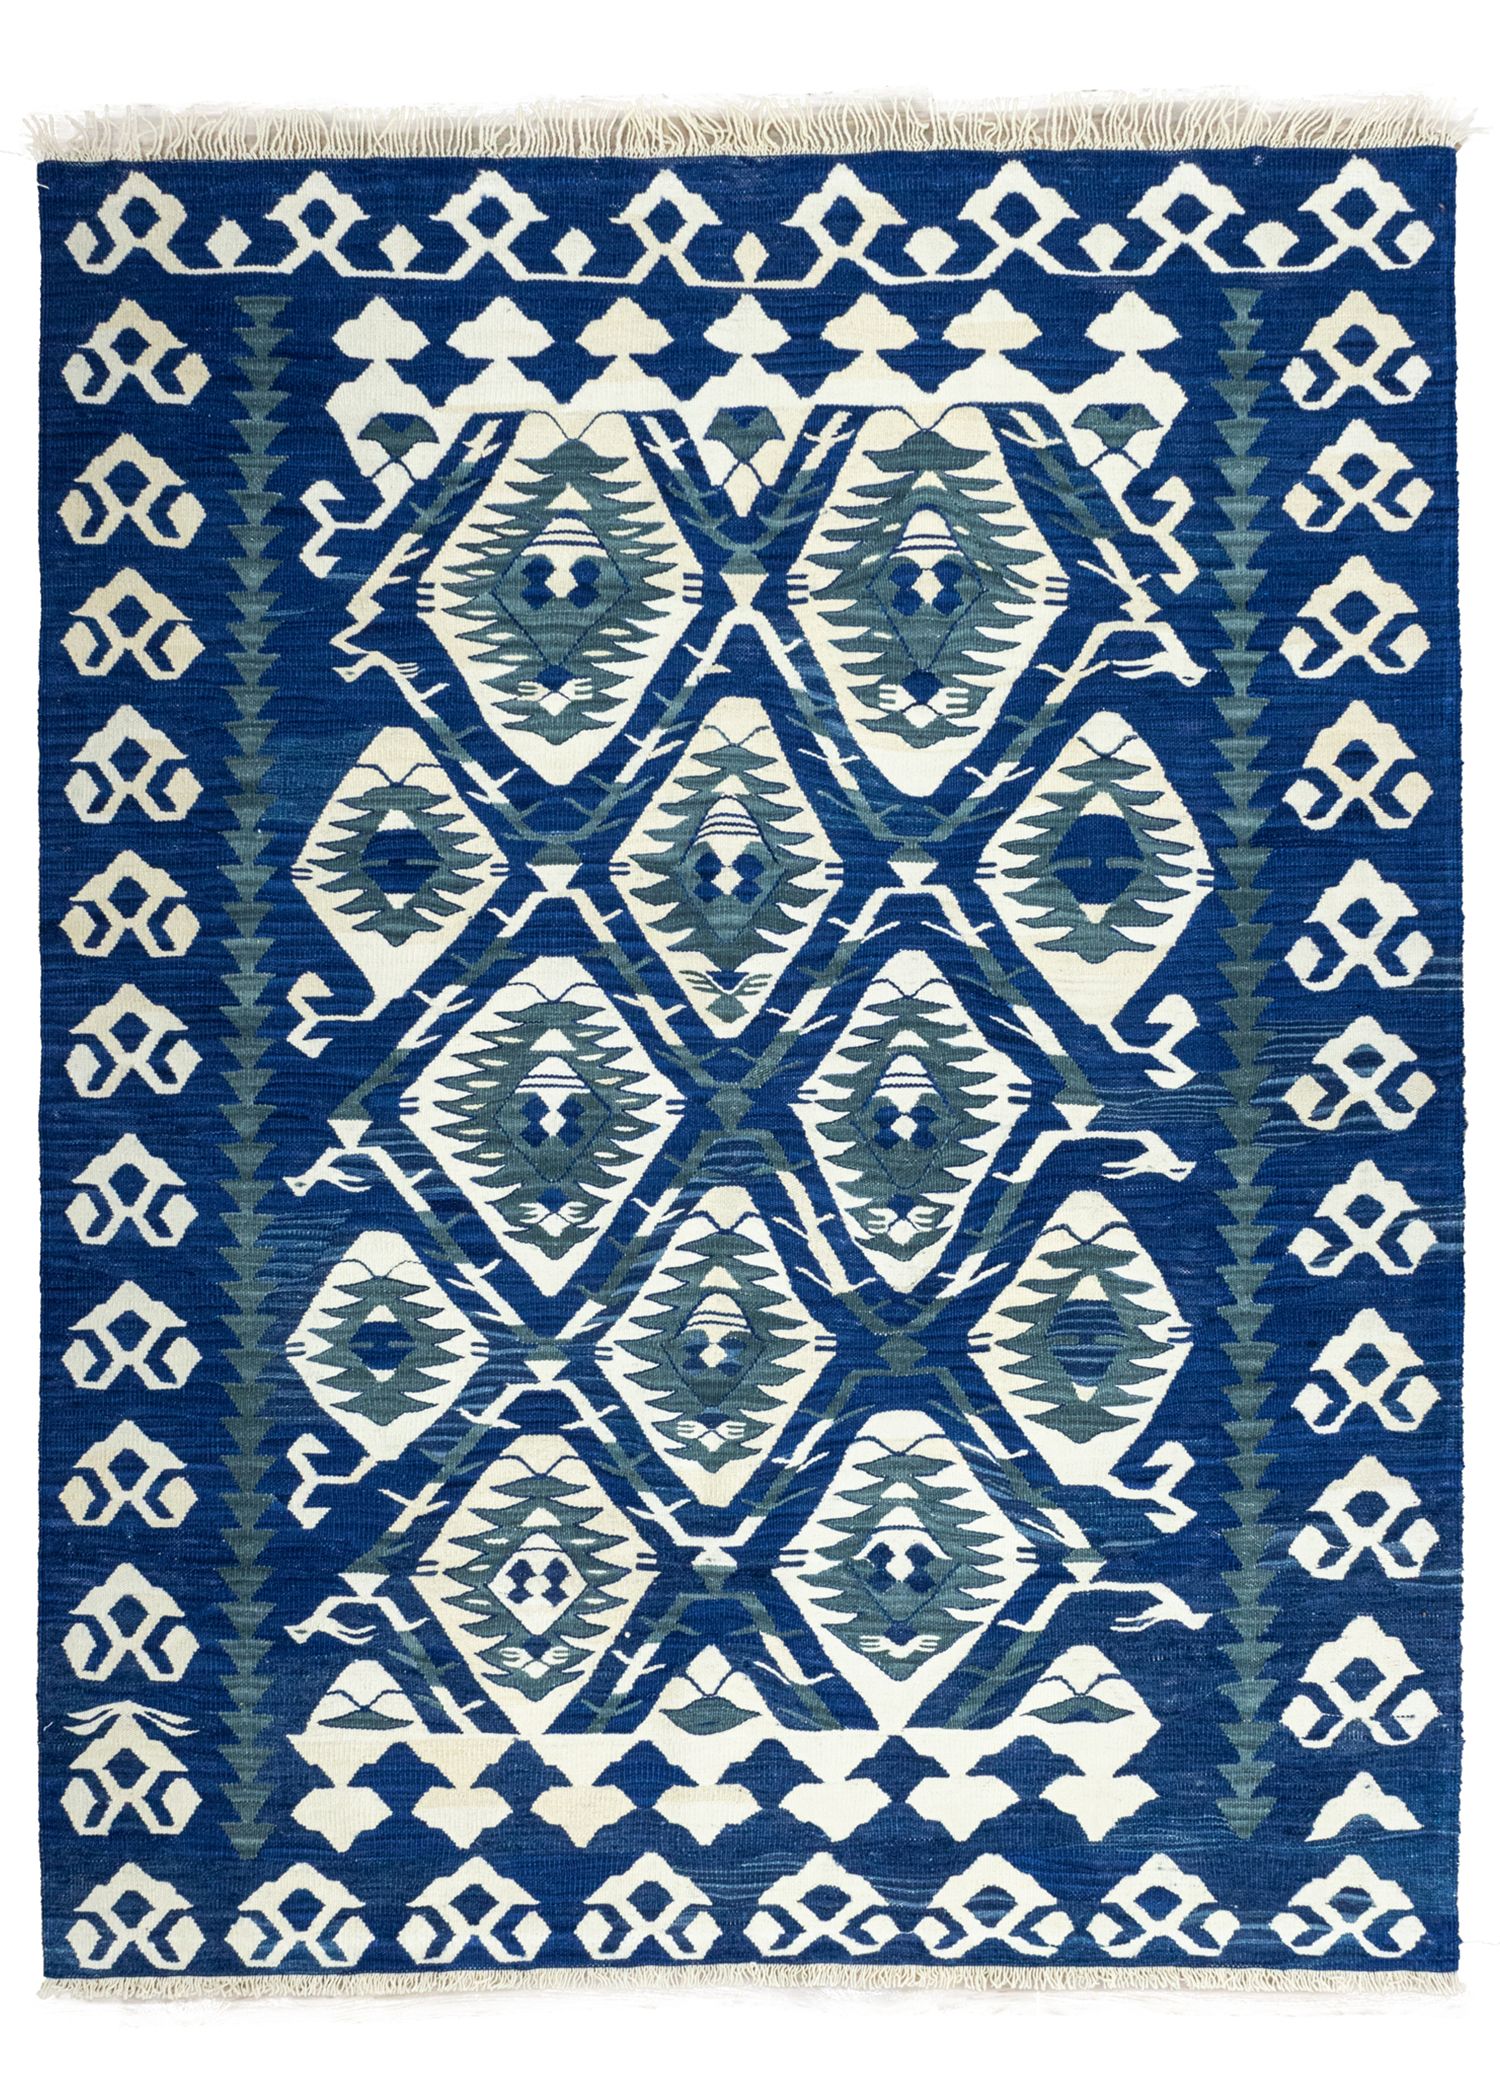 Siyurgal Primitive Patterned Hand Woven Wool Rug 154x194 cm